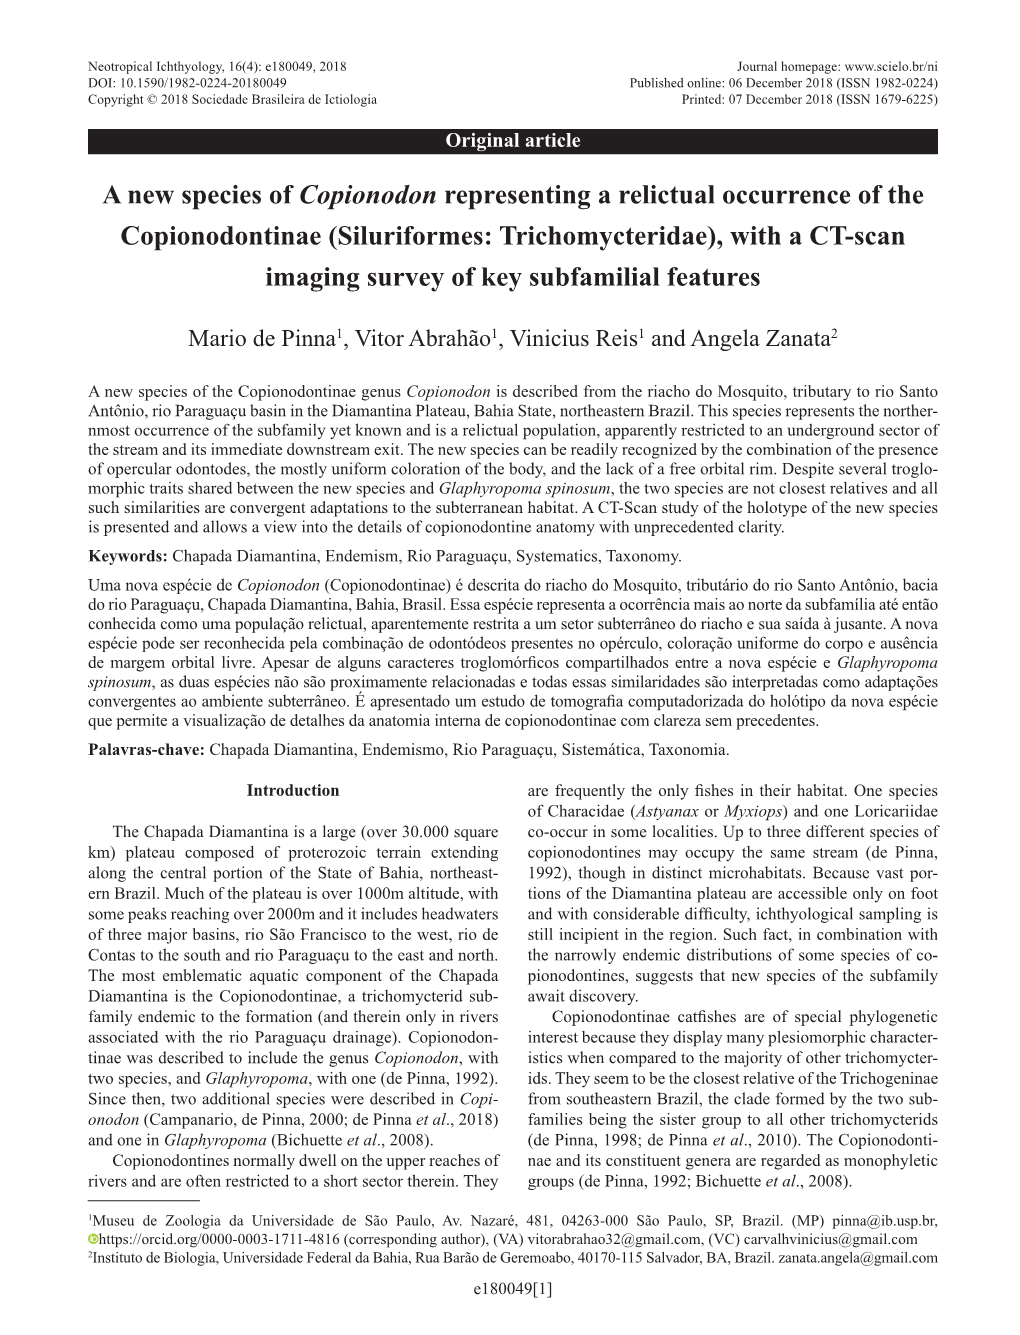 A New Species of Copionodon Representing a Relictual Occurrence